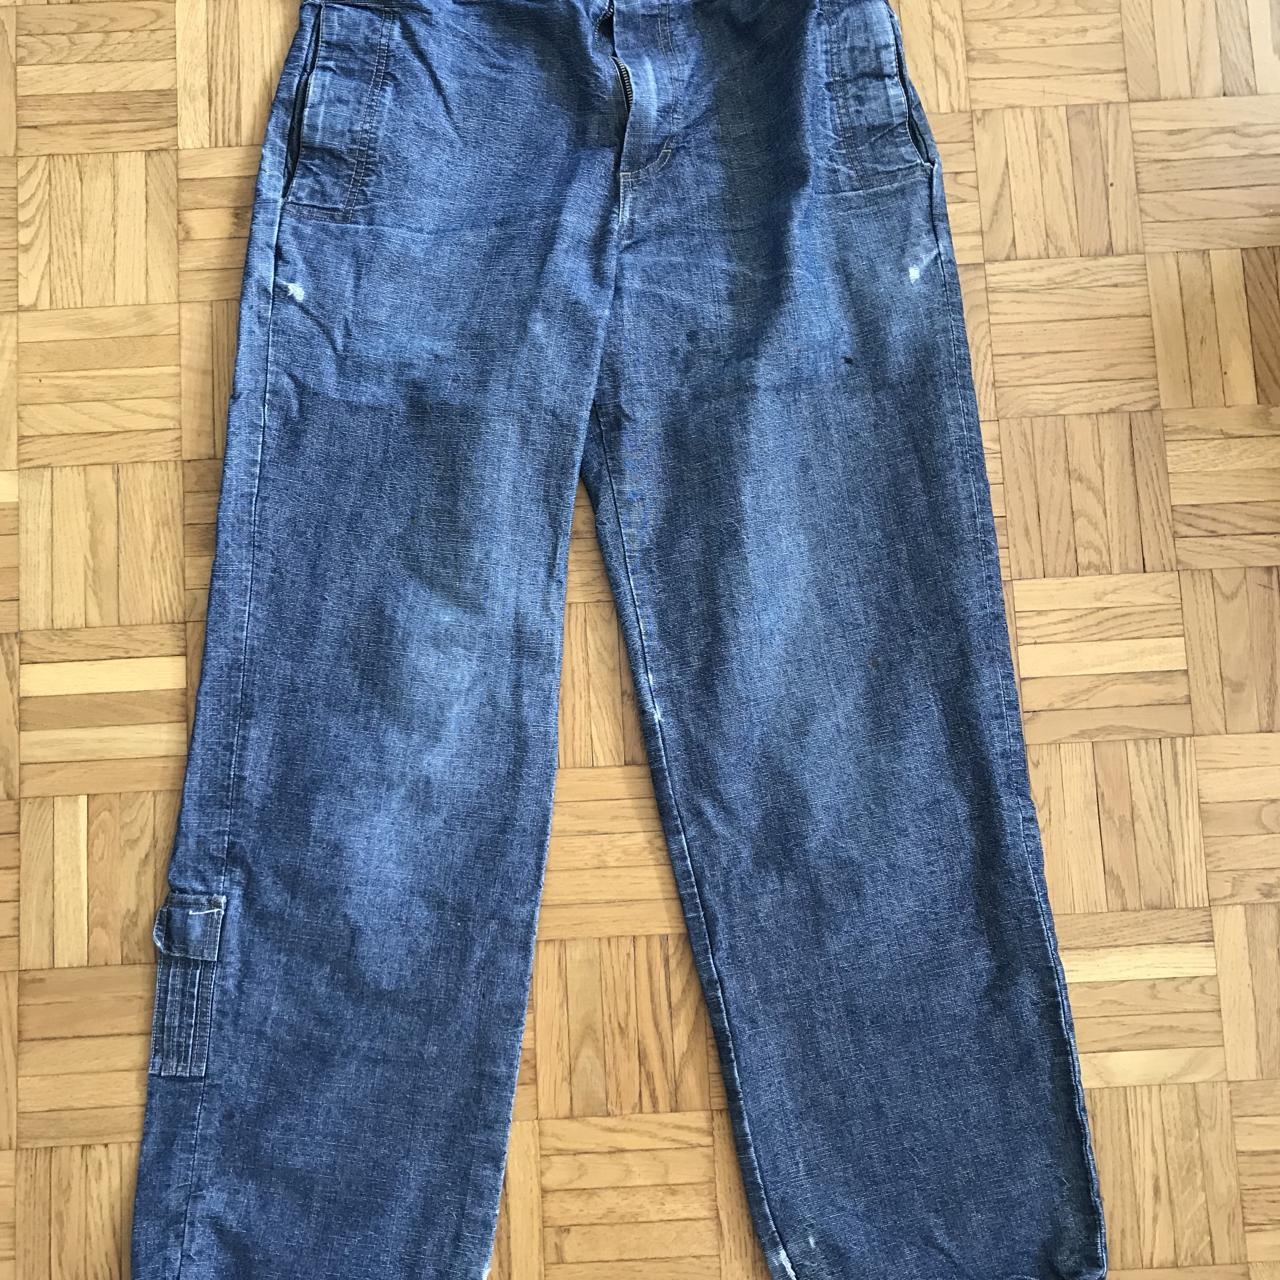 Vær forsigtig Udover Allerede For sale Bullrot wear jeans. Used stained and abused... - Depop